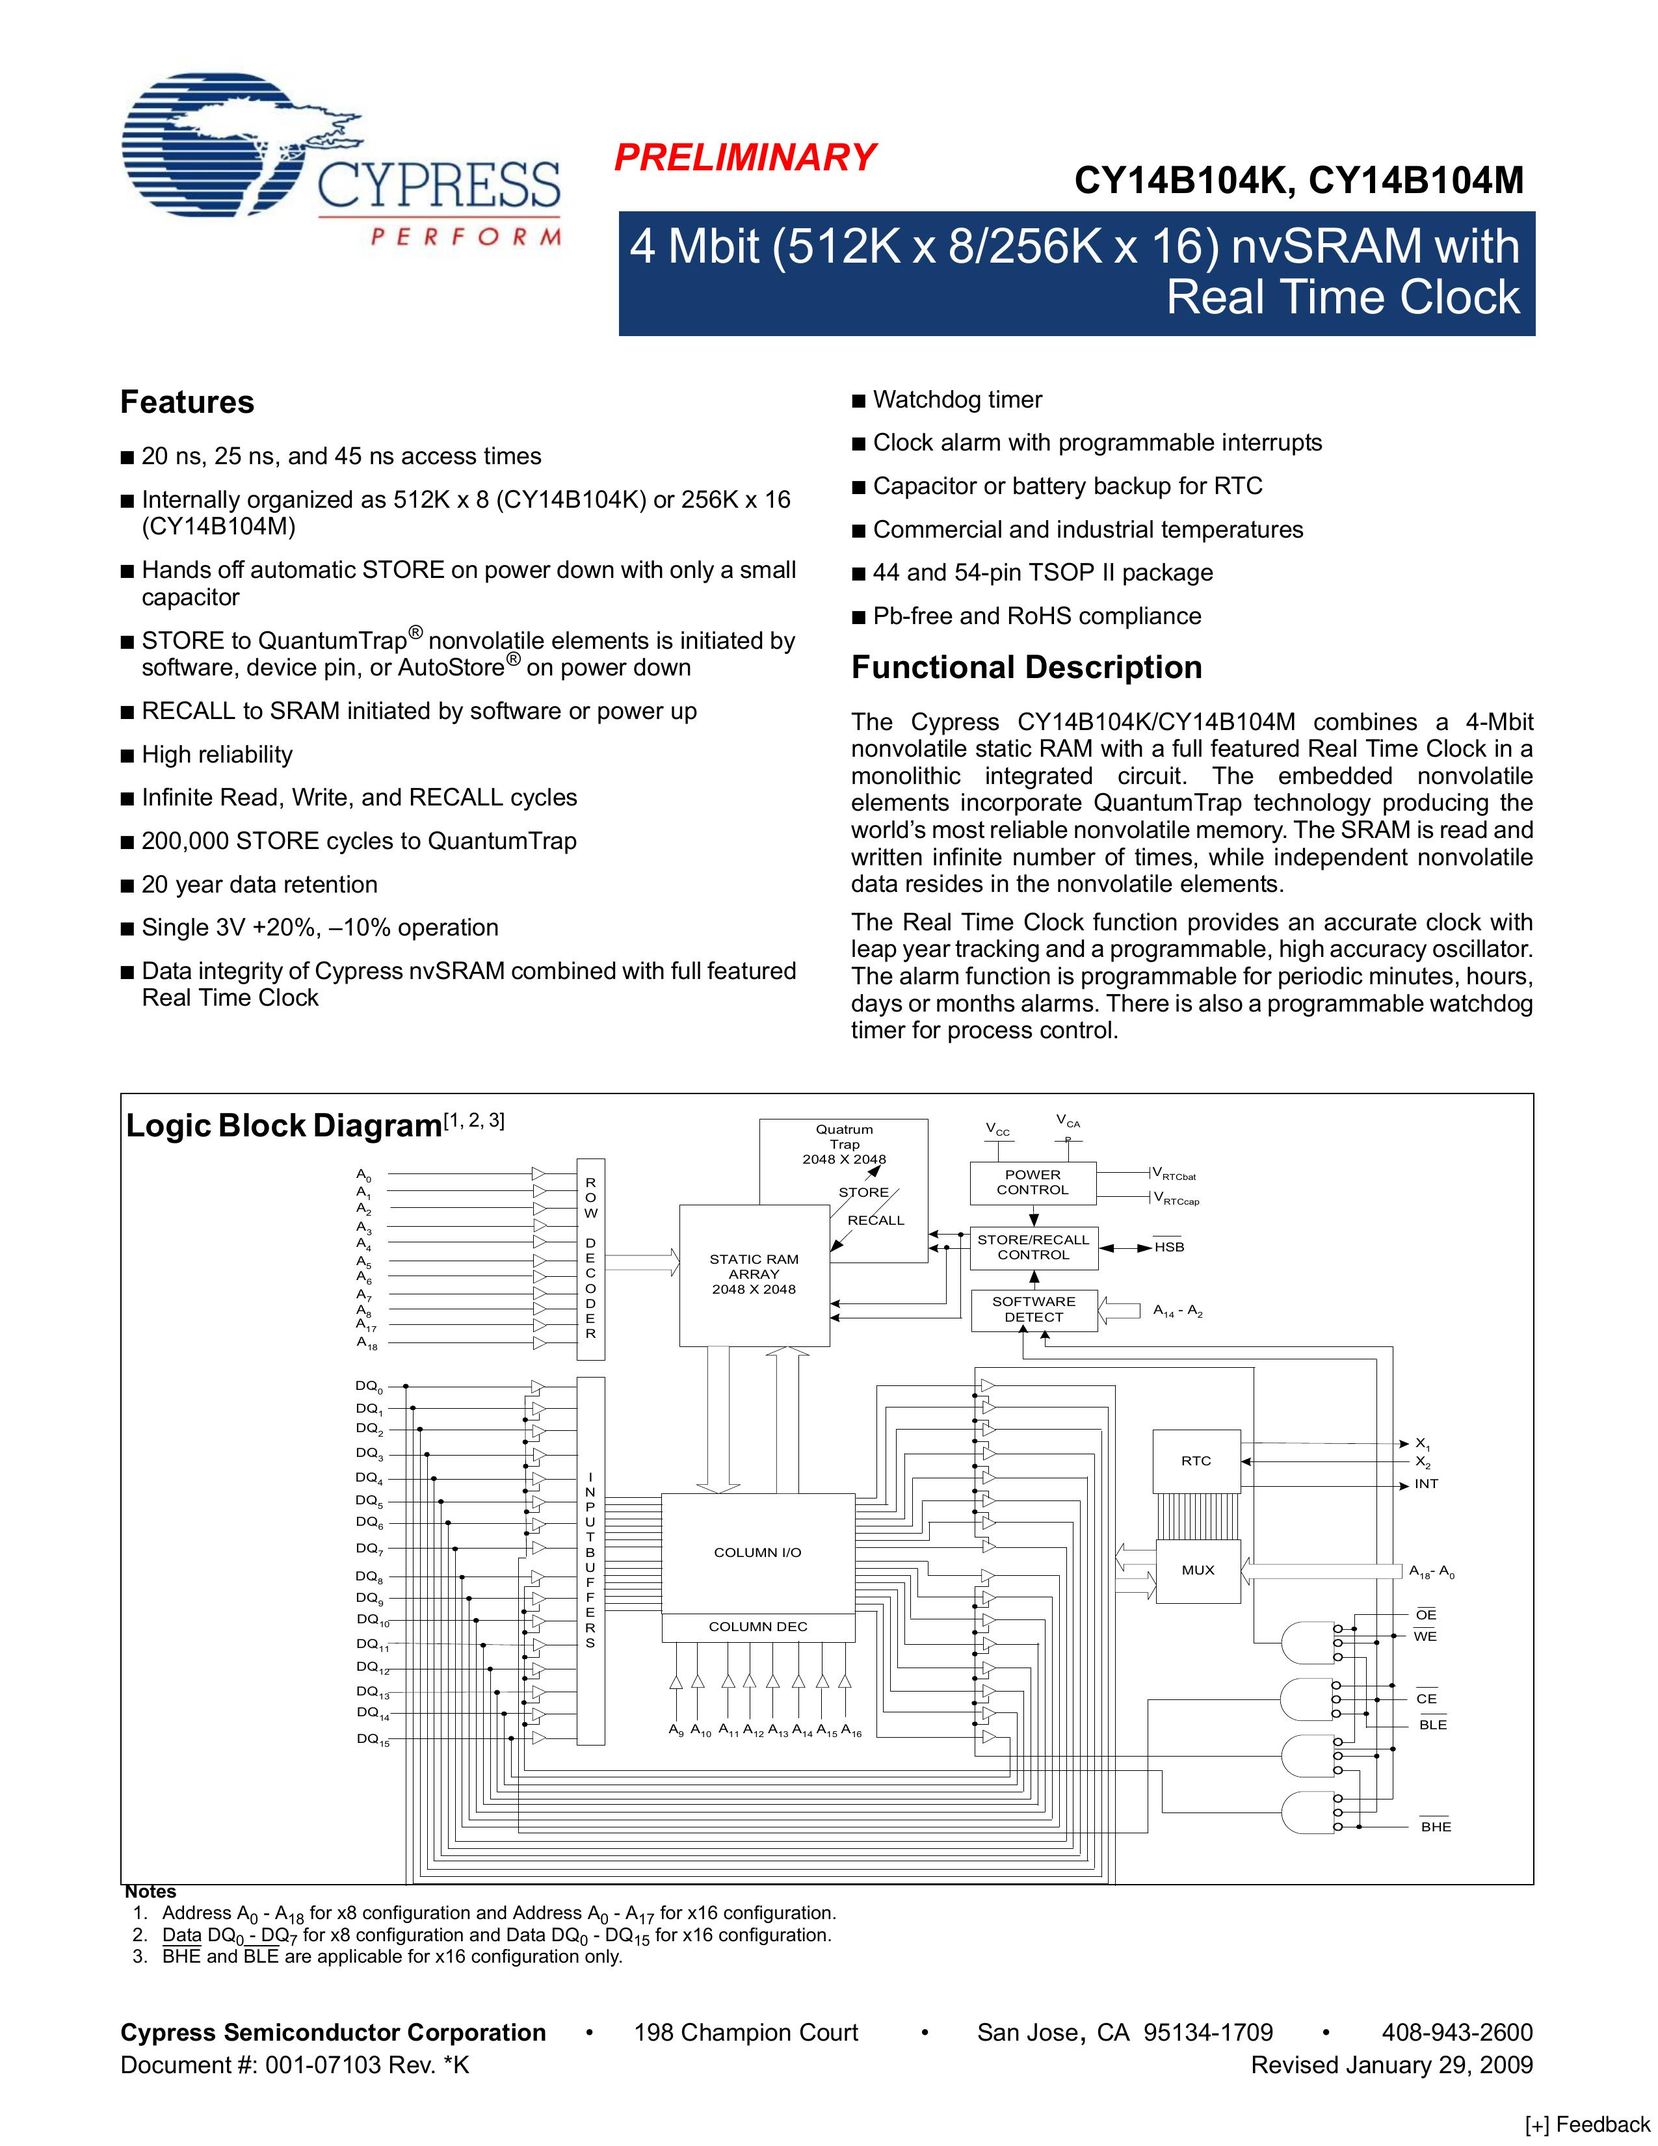 Cypress CY14B104K Computer Hardware User Manual